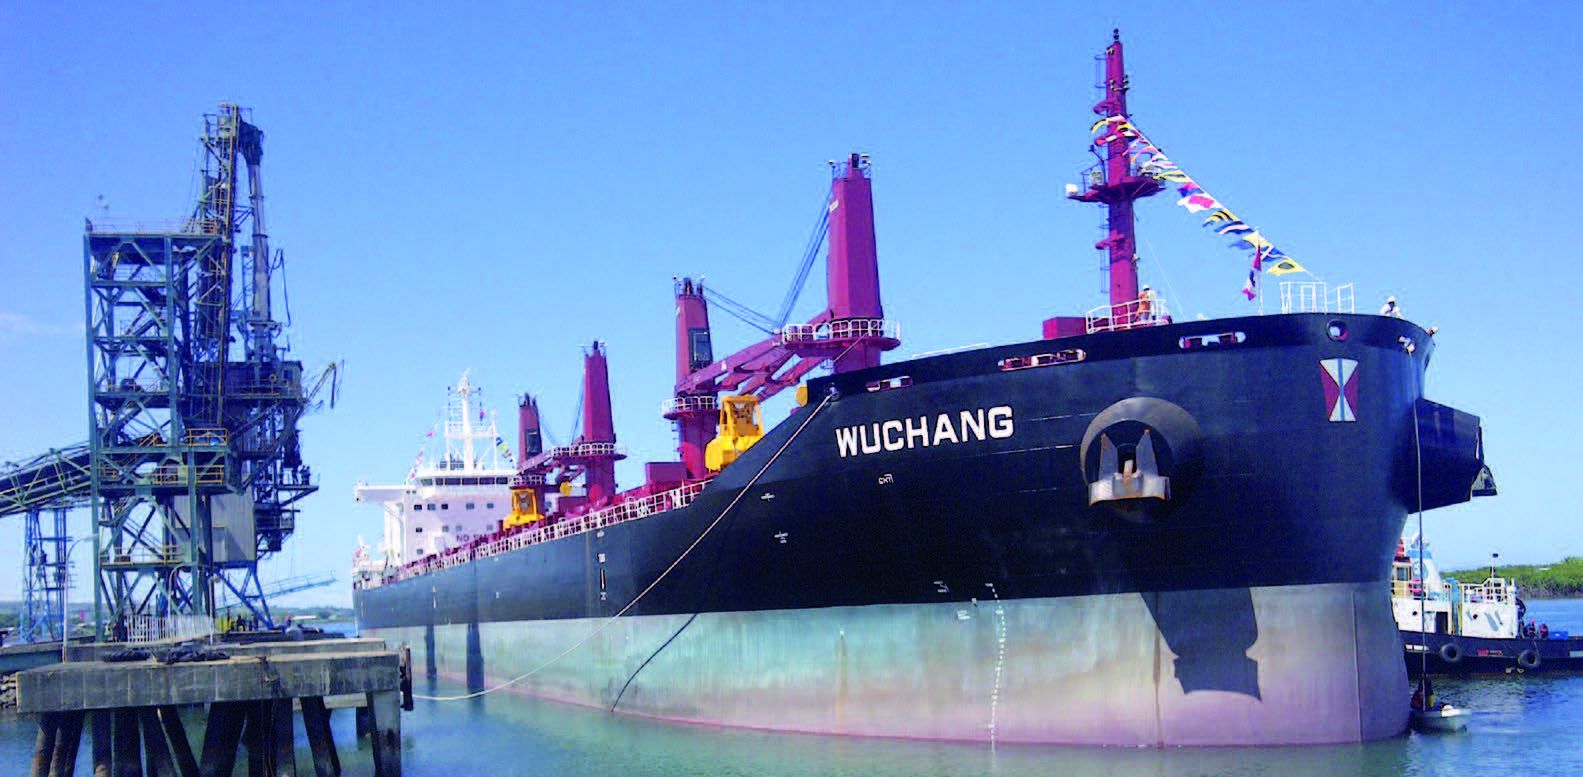 Handymax bulk carrier WUCHANG of B.Delta 37 type designed by Deltamarin